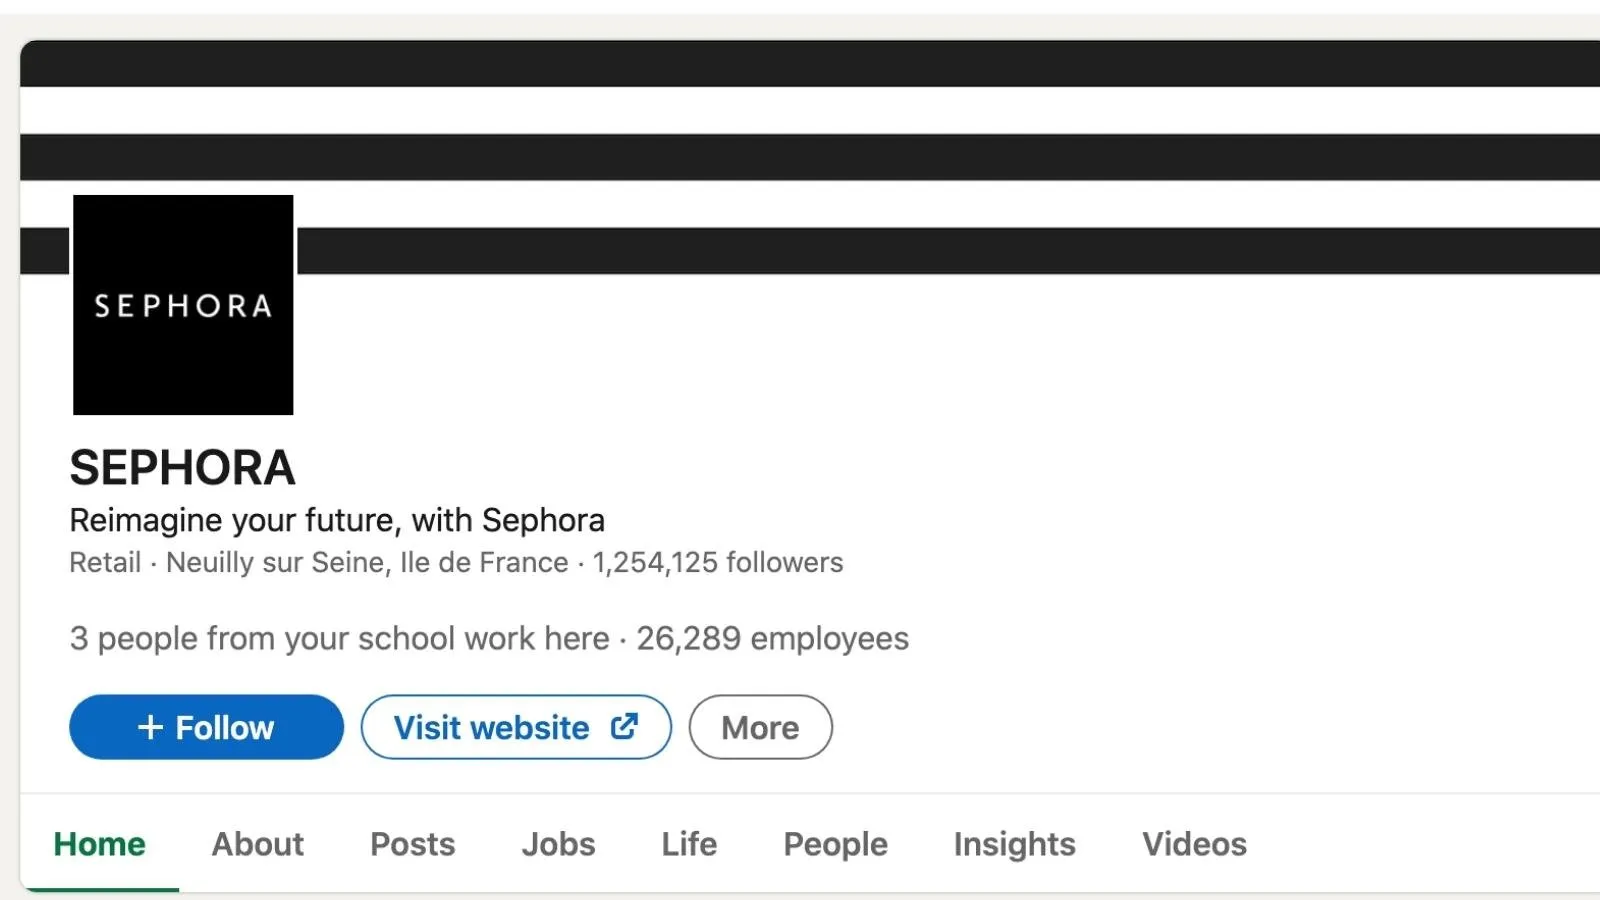 social media brand building with Sephora on LinkedIn